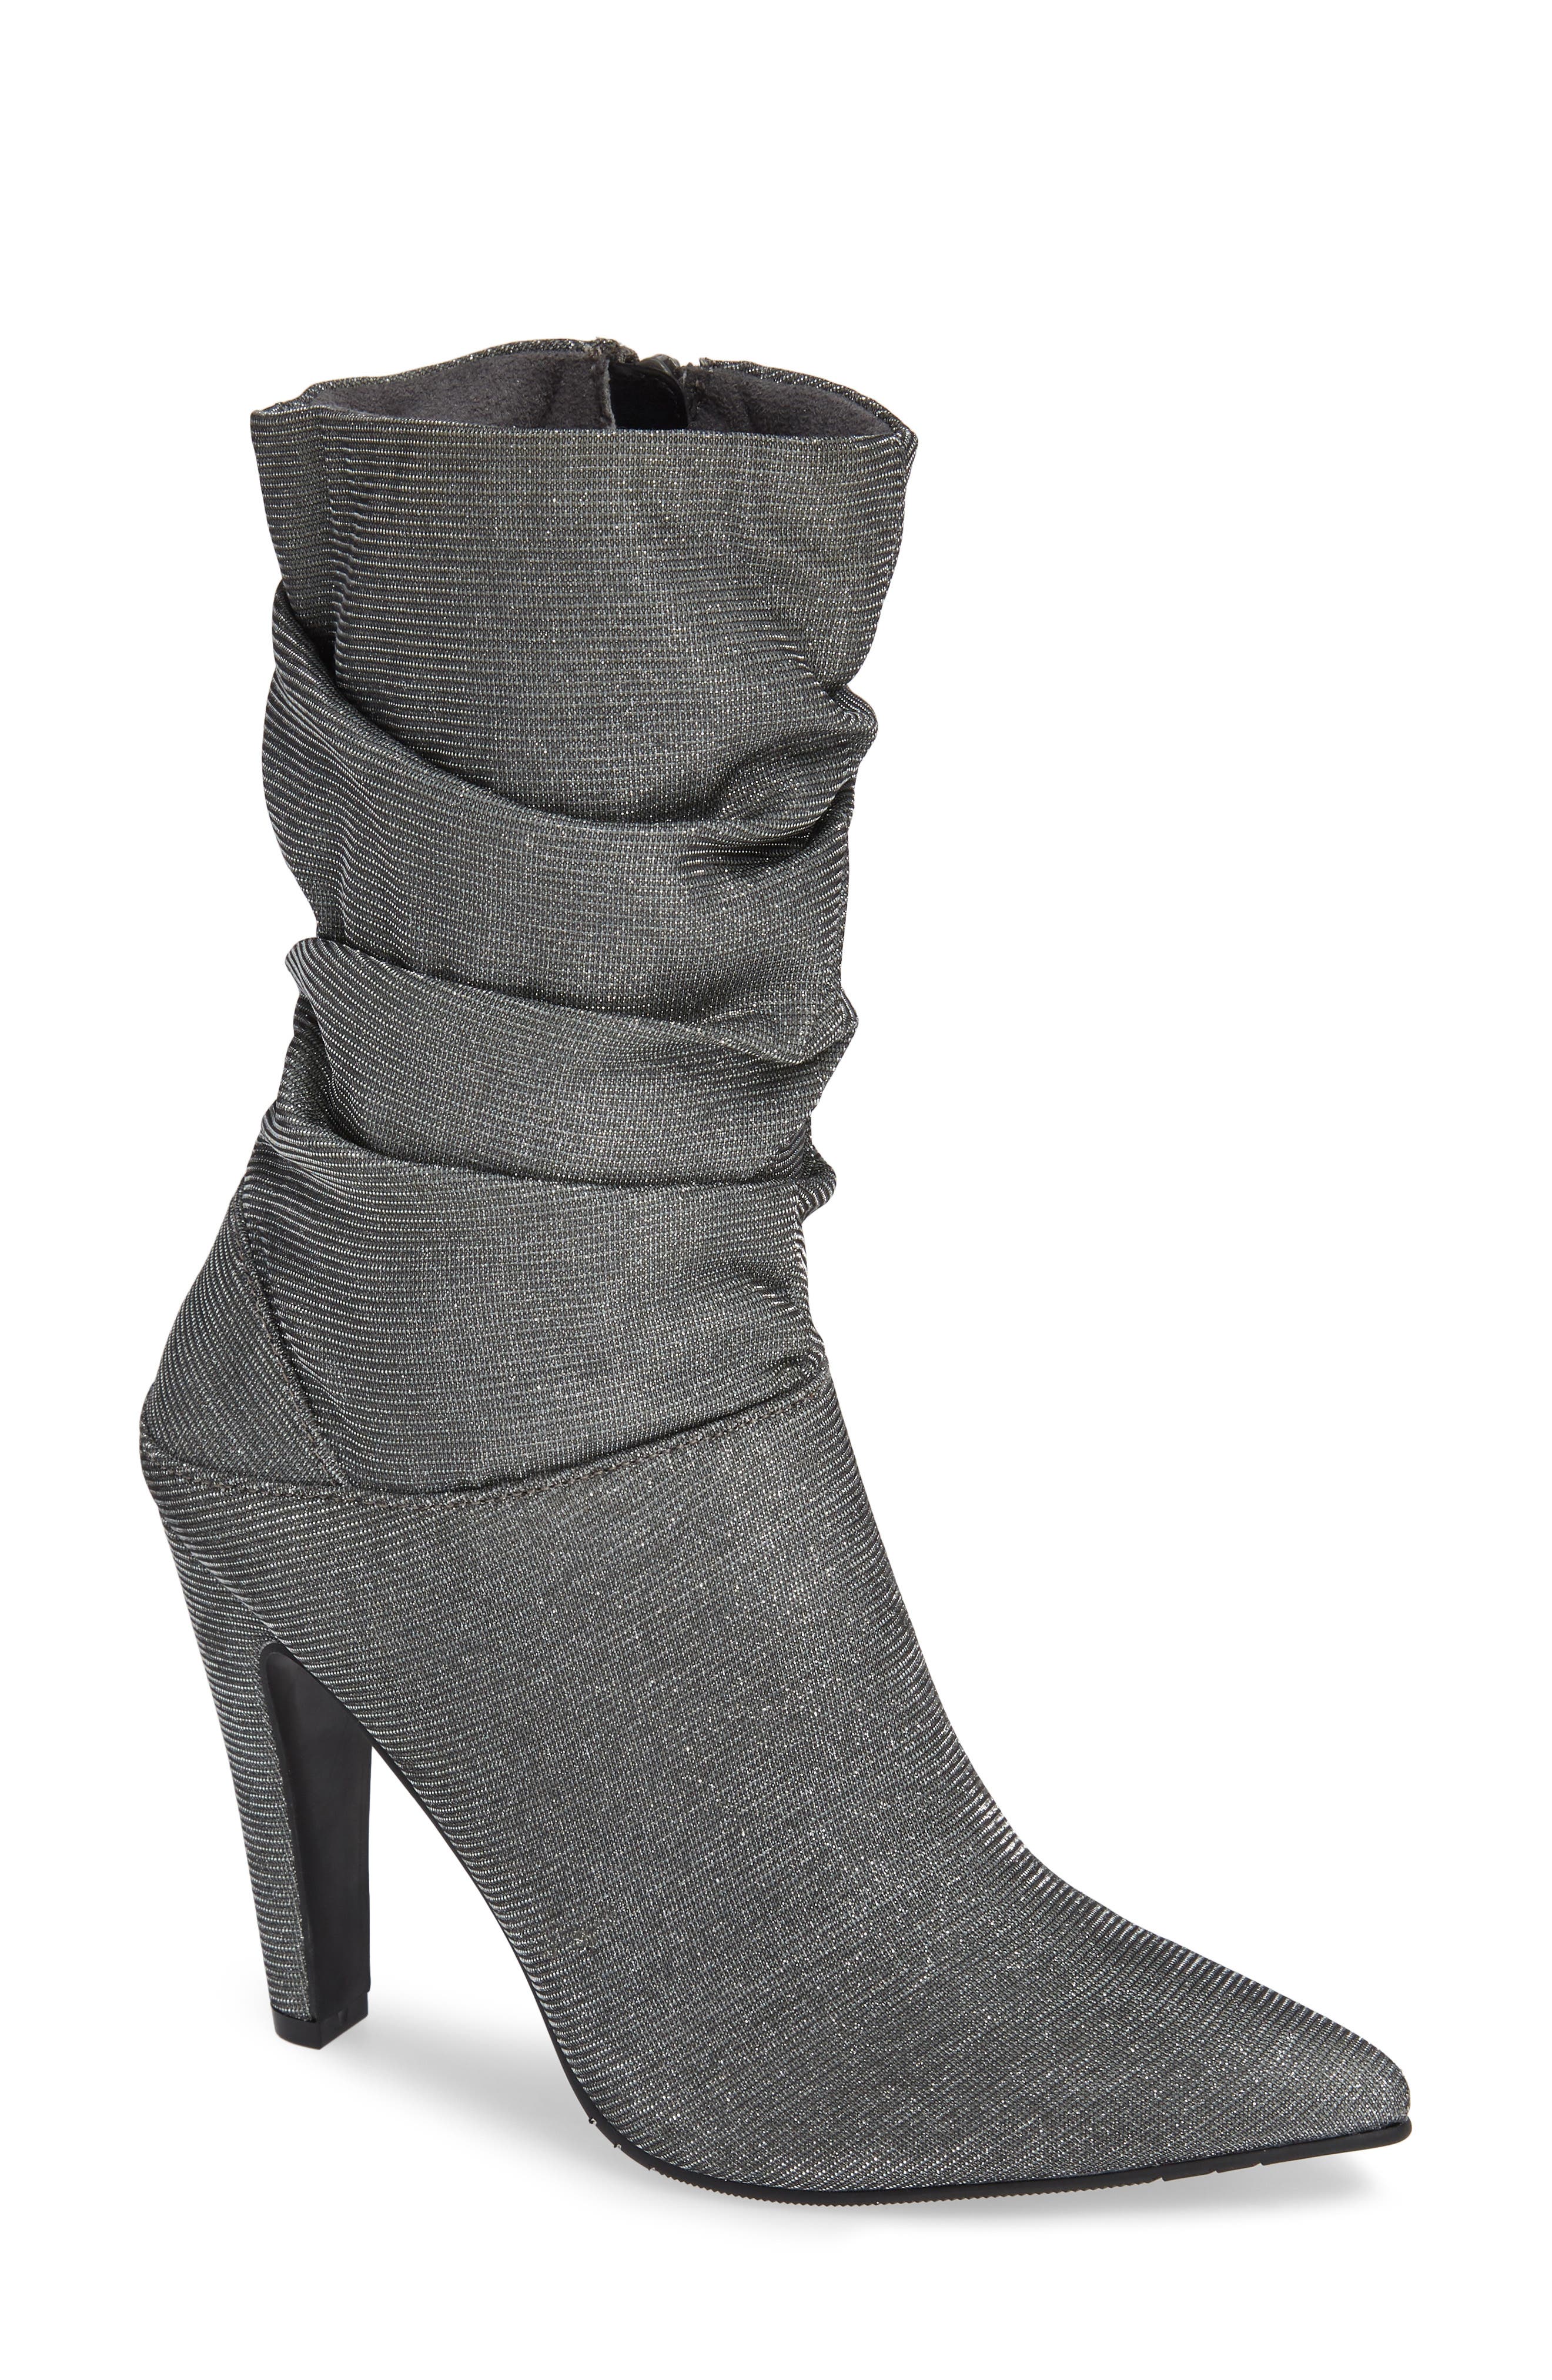 UPC 716142081325 product image for Women's Nina Darla Bootie, Size 7.5 M - Grey | upcitemdb.com